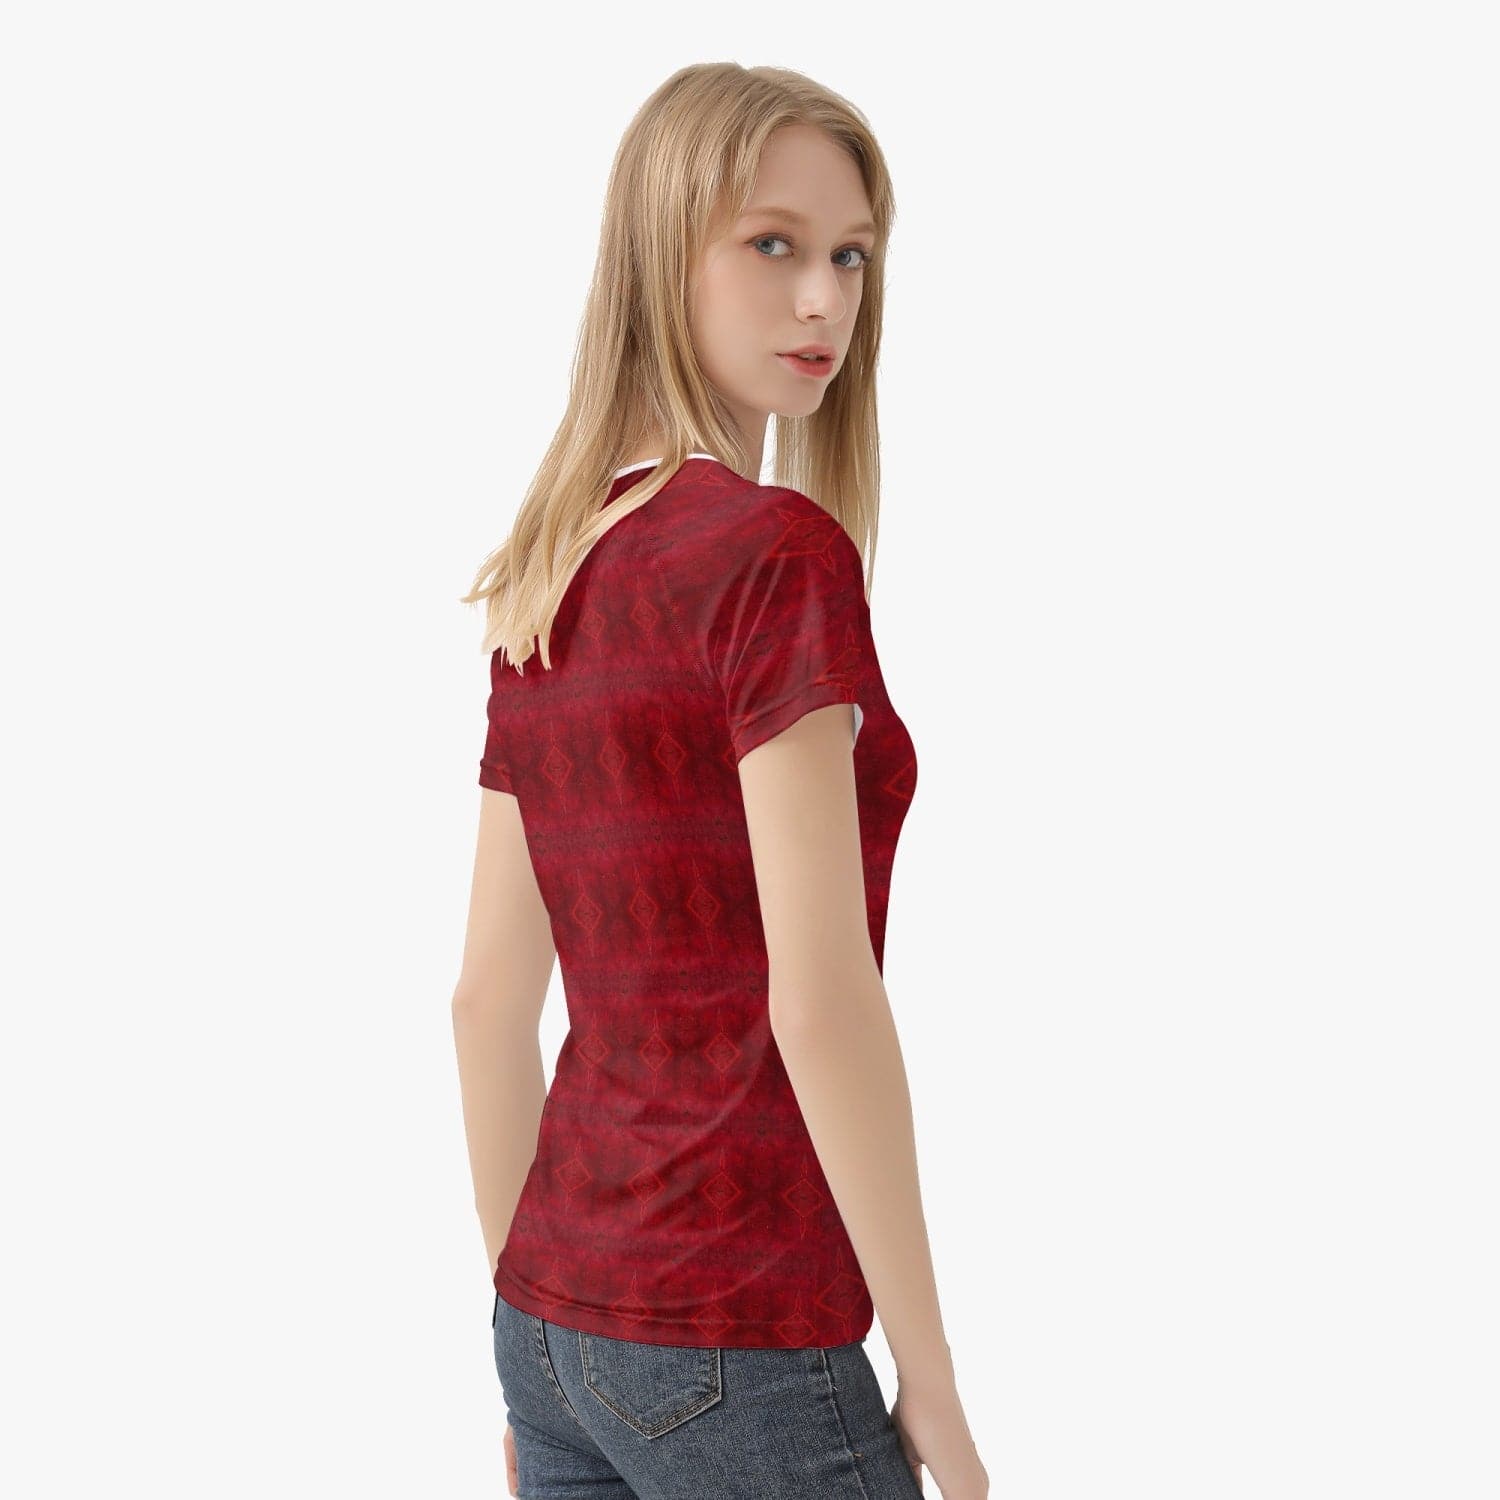 Dark Red Patterned Handmade Stylish Women T-shirt Sports/ Yoga Top, by Sensus Studio Design